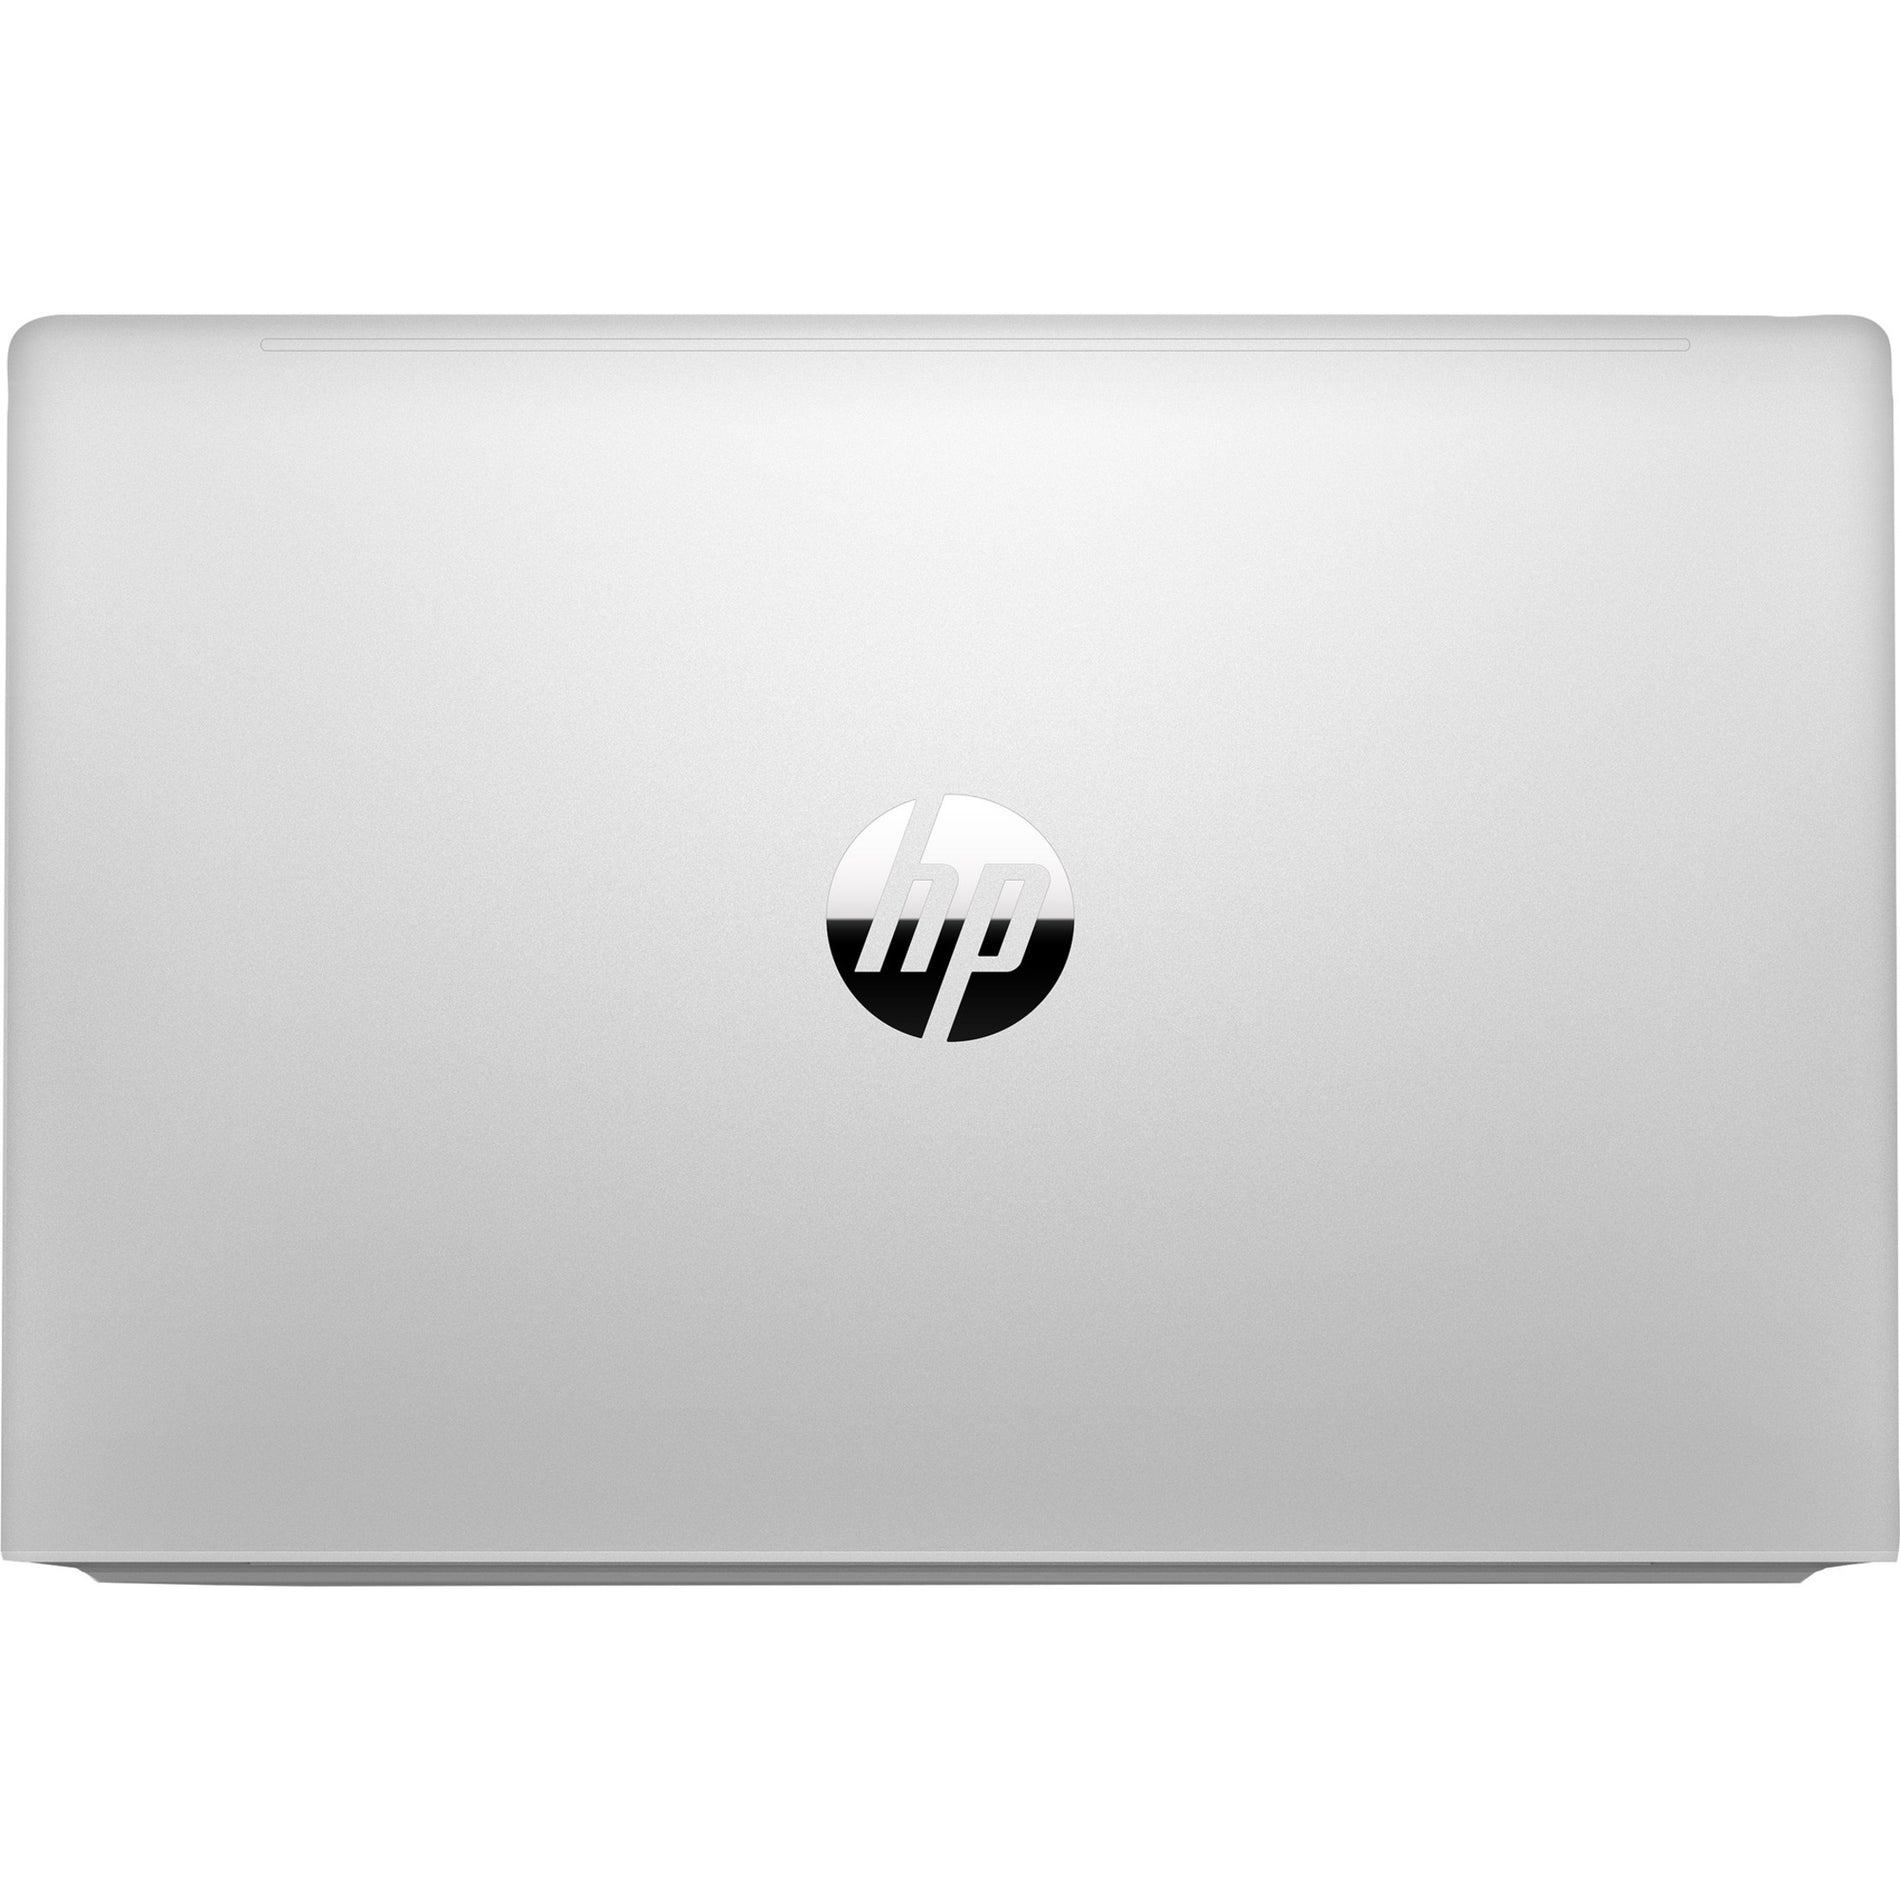 HP Pro mt440 G3 Mobile Thin Client Notebook, 14" HD, Intel Celeron 12th Gen, 8GB RAM, 256GB SSD